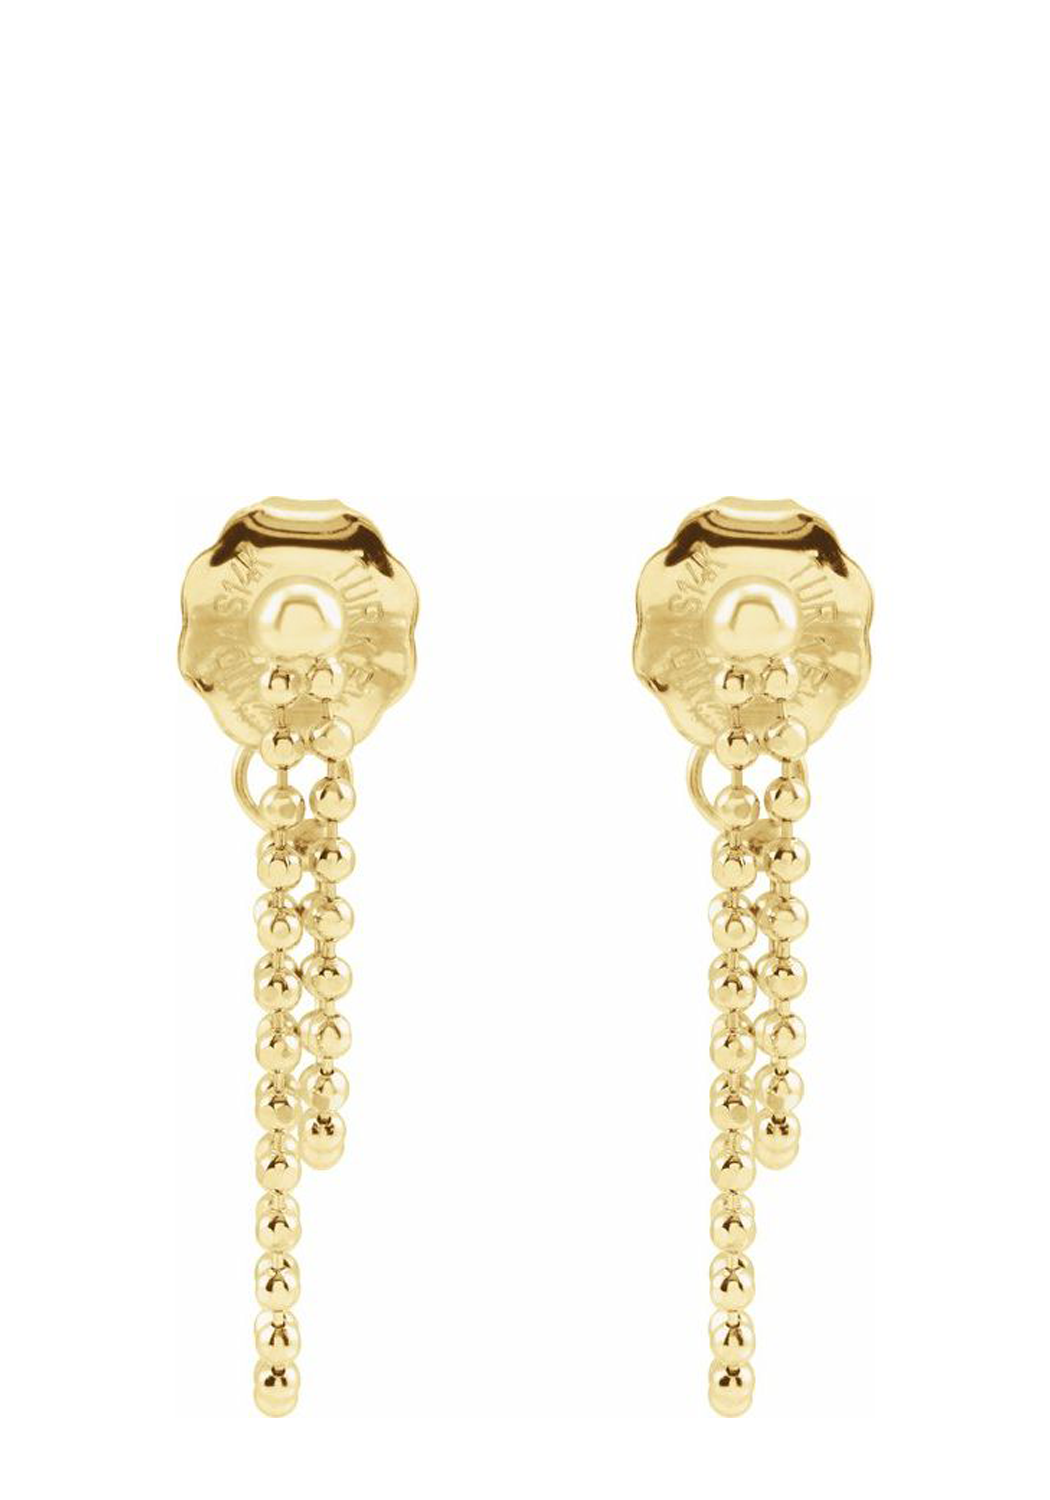 14K Yellow Gold Bead Chain Earrings | OsterJewelers.com